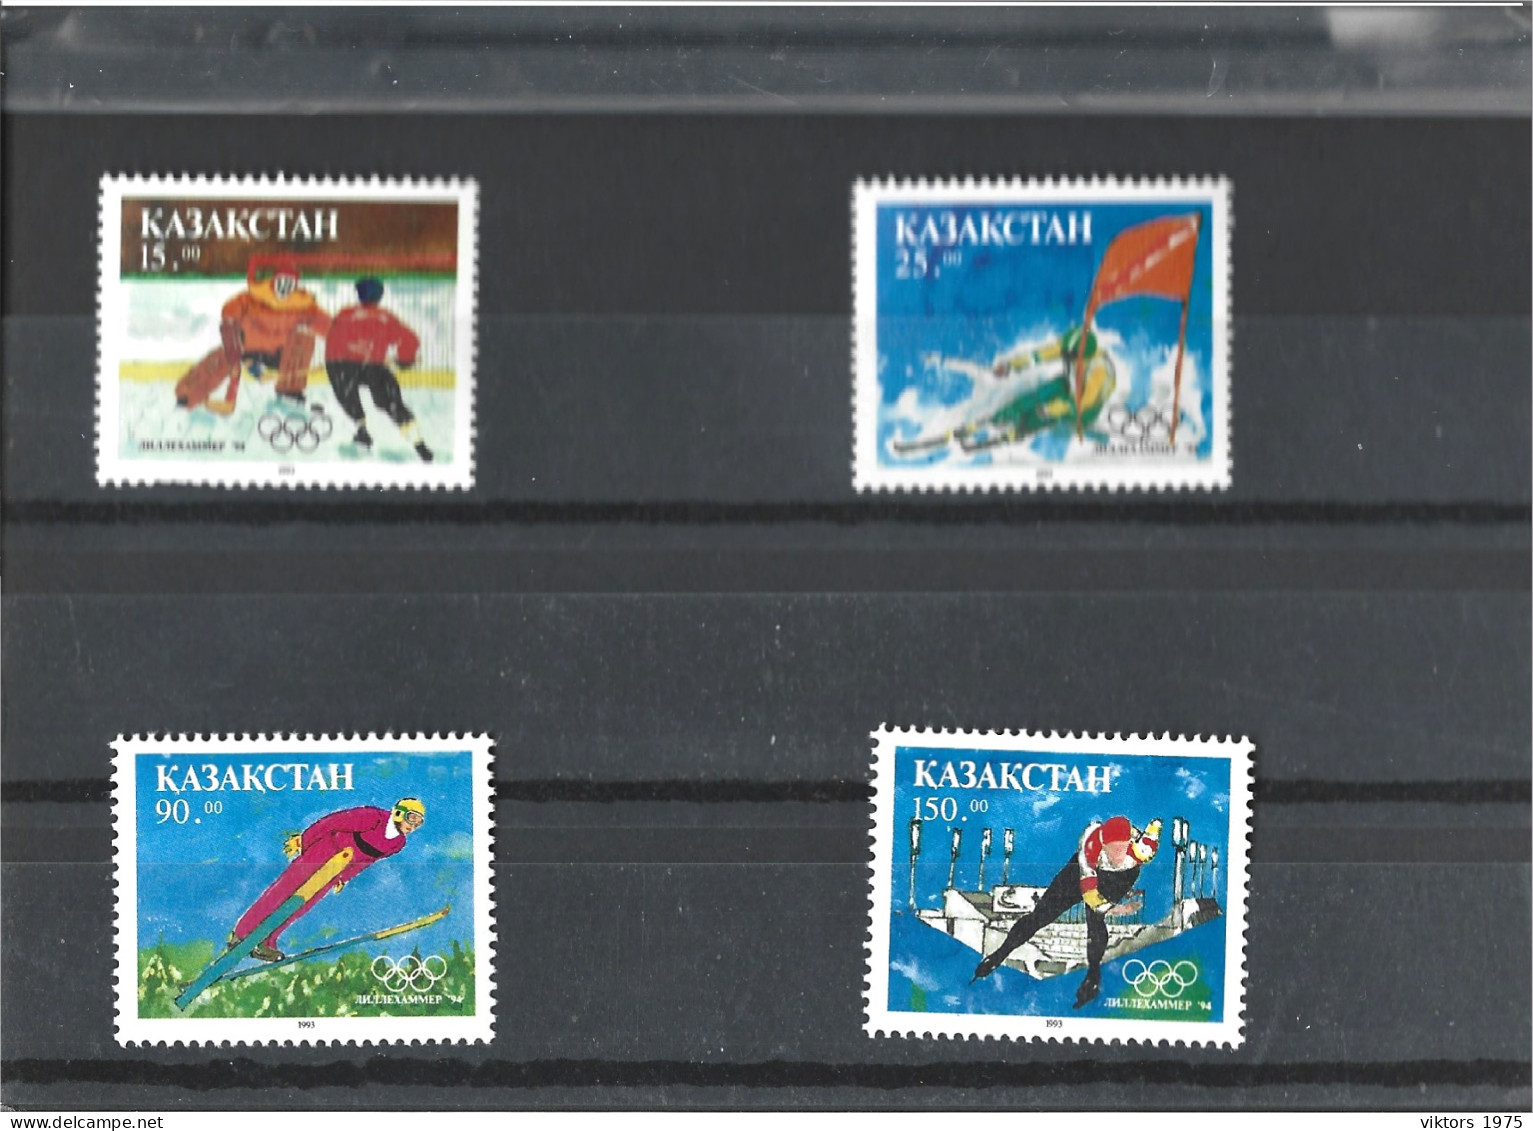 MNH Stamps Nr.37-40 In MICHEL Catalog - Kazakhstan